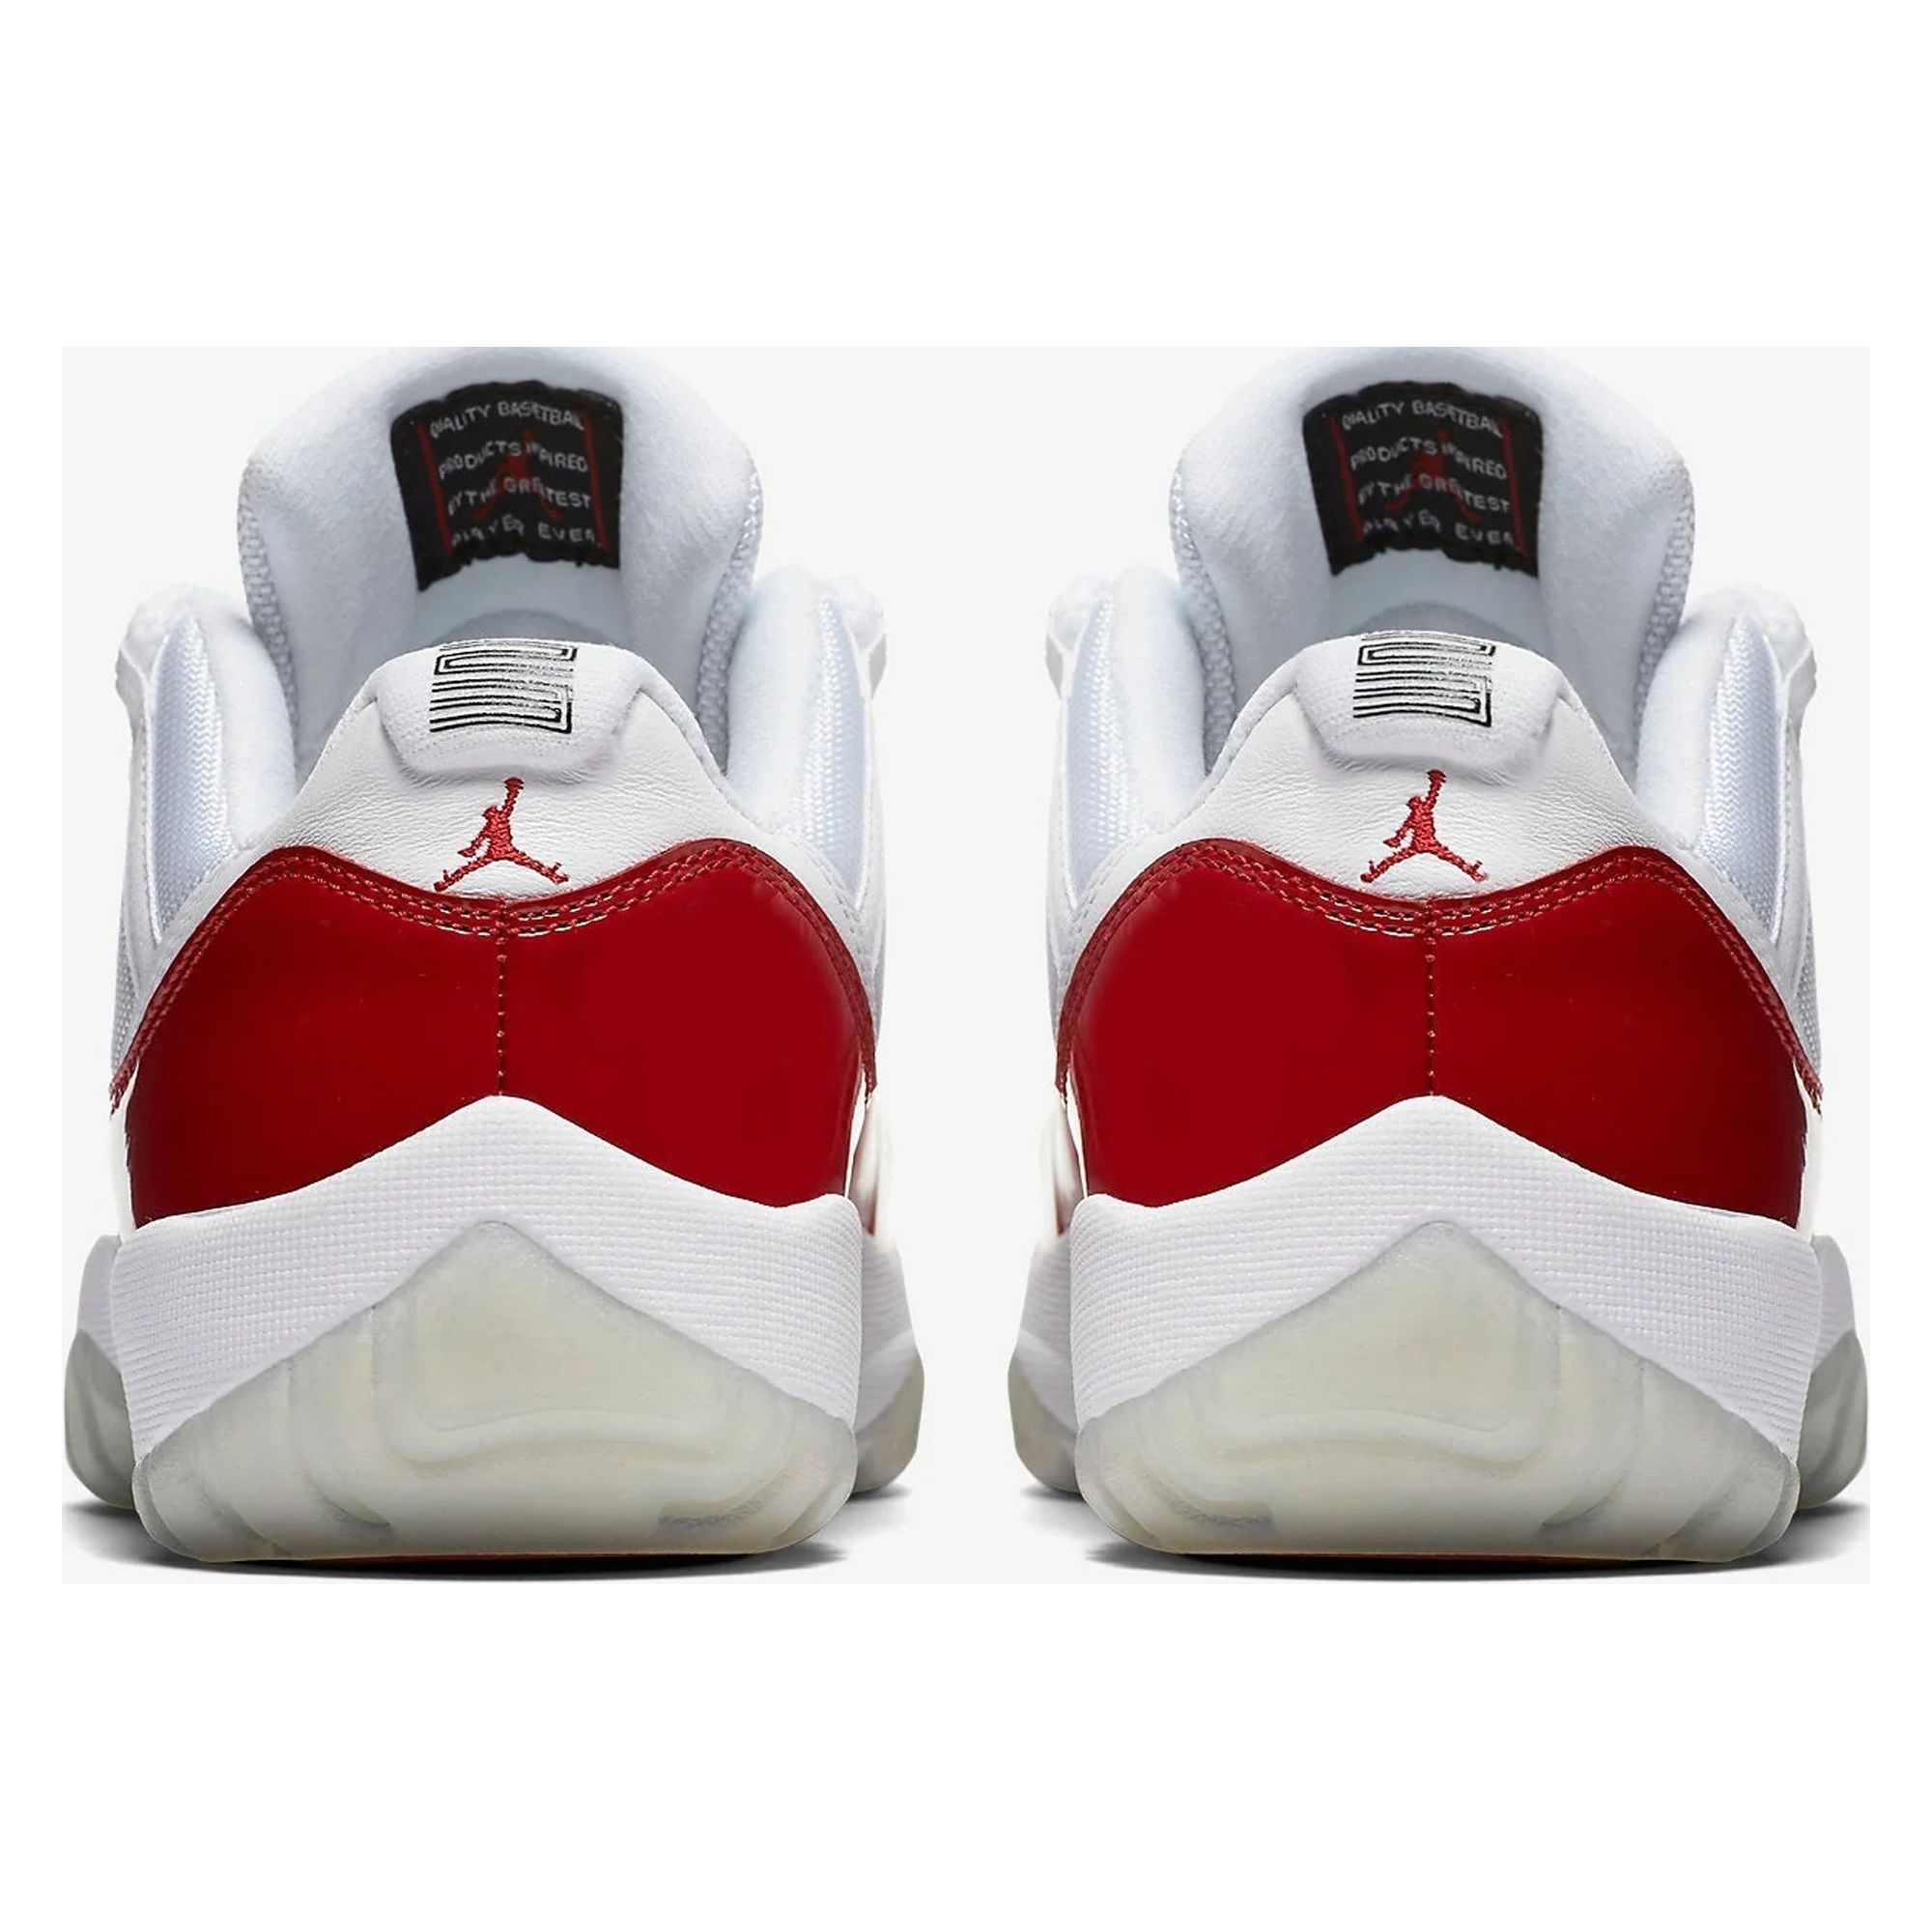 Nike Mens Air Jordan 11 Retro Low White/Varsity Red-Black 528895-102 - image 5 of 6